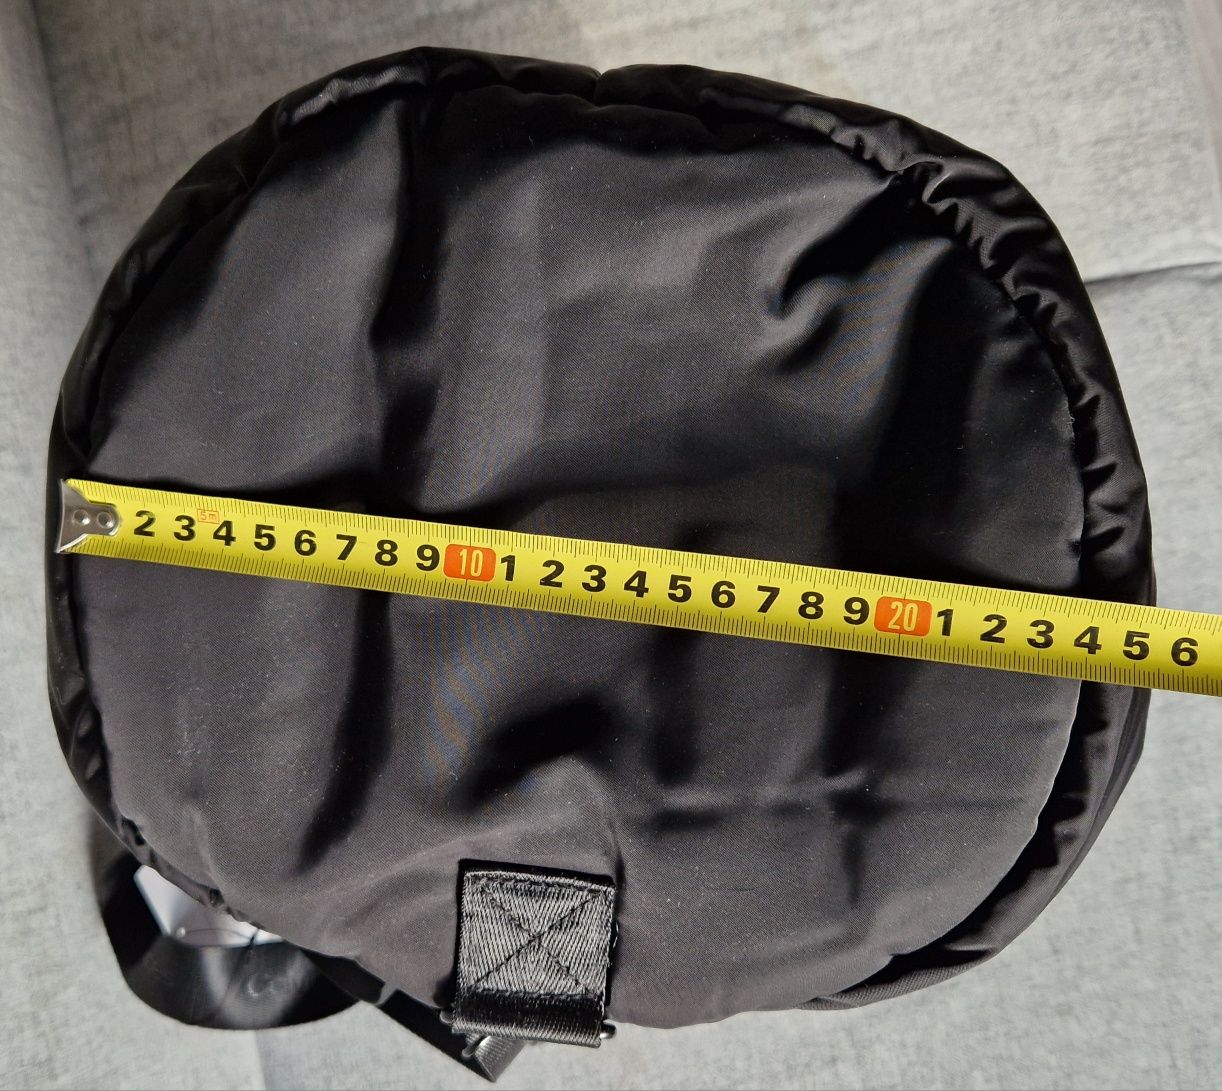 Calvin Klein torba torebka duża podróżna oryginalna czarna